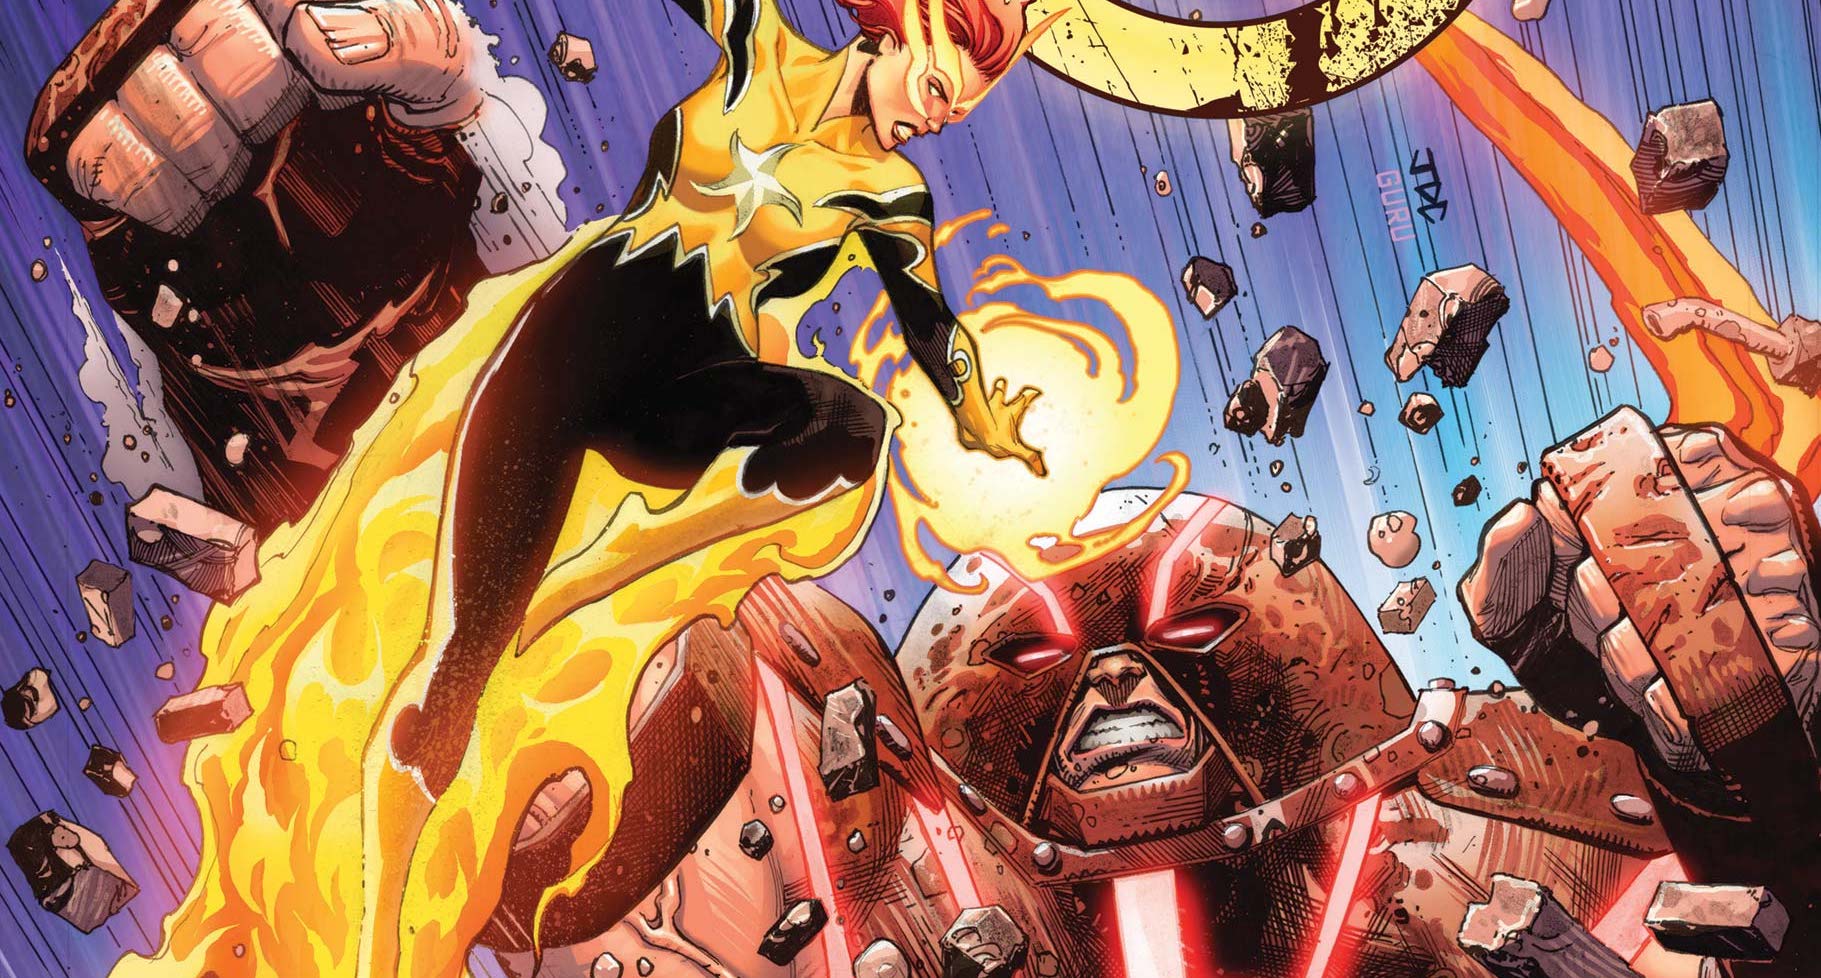 EXCLUSIVE Marvel Preview: X-Men #28